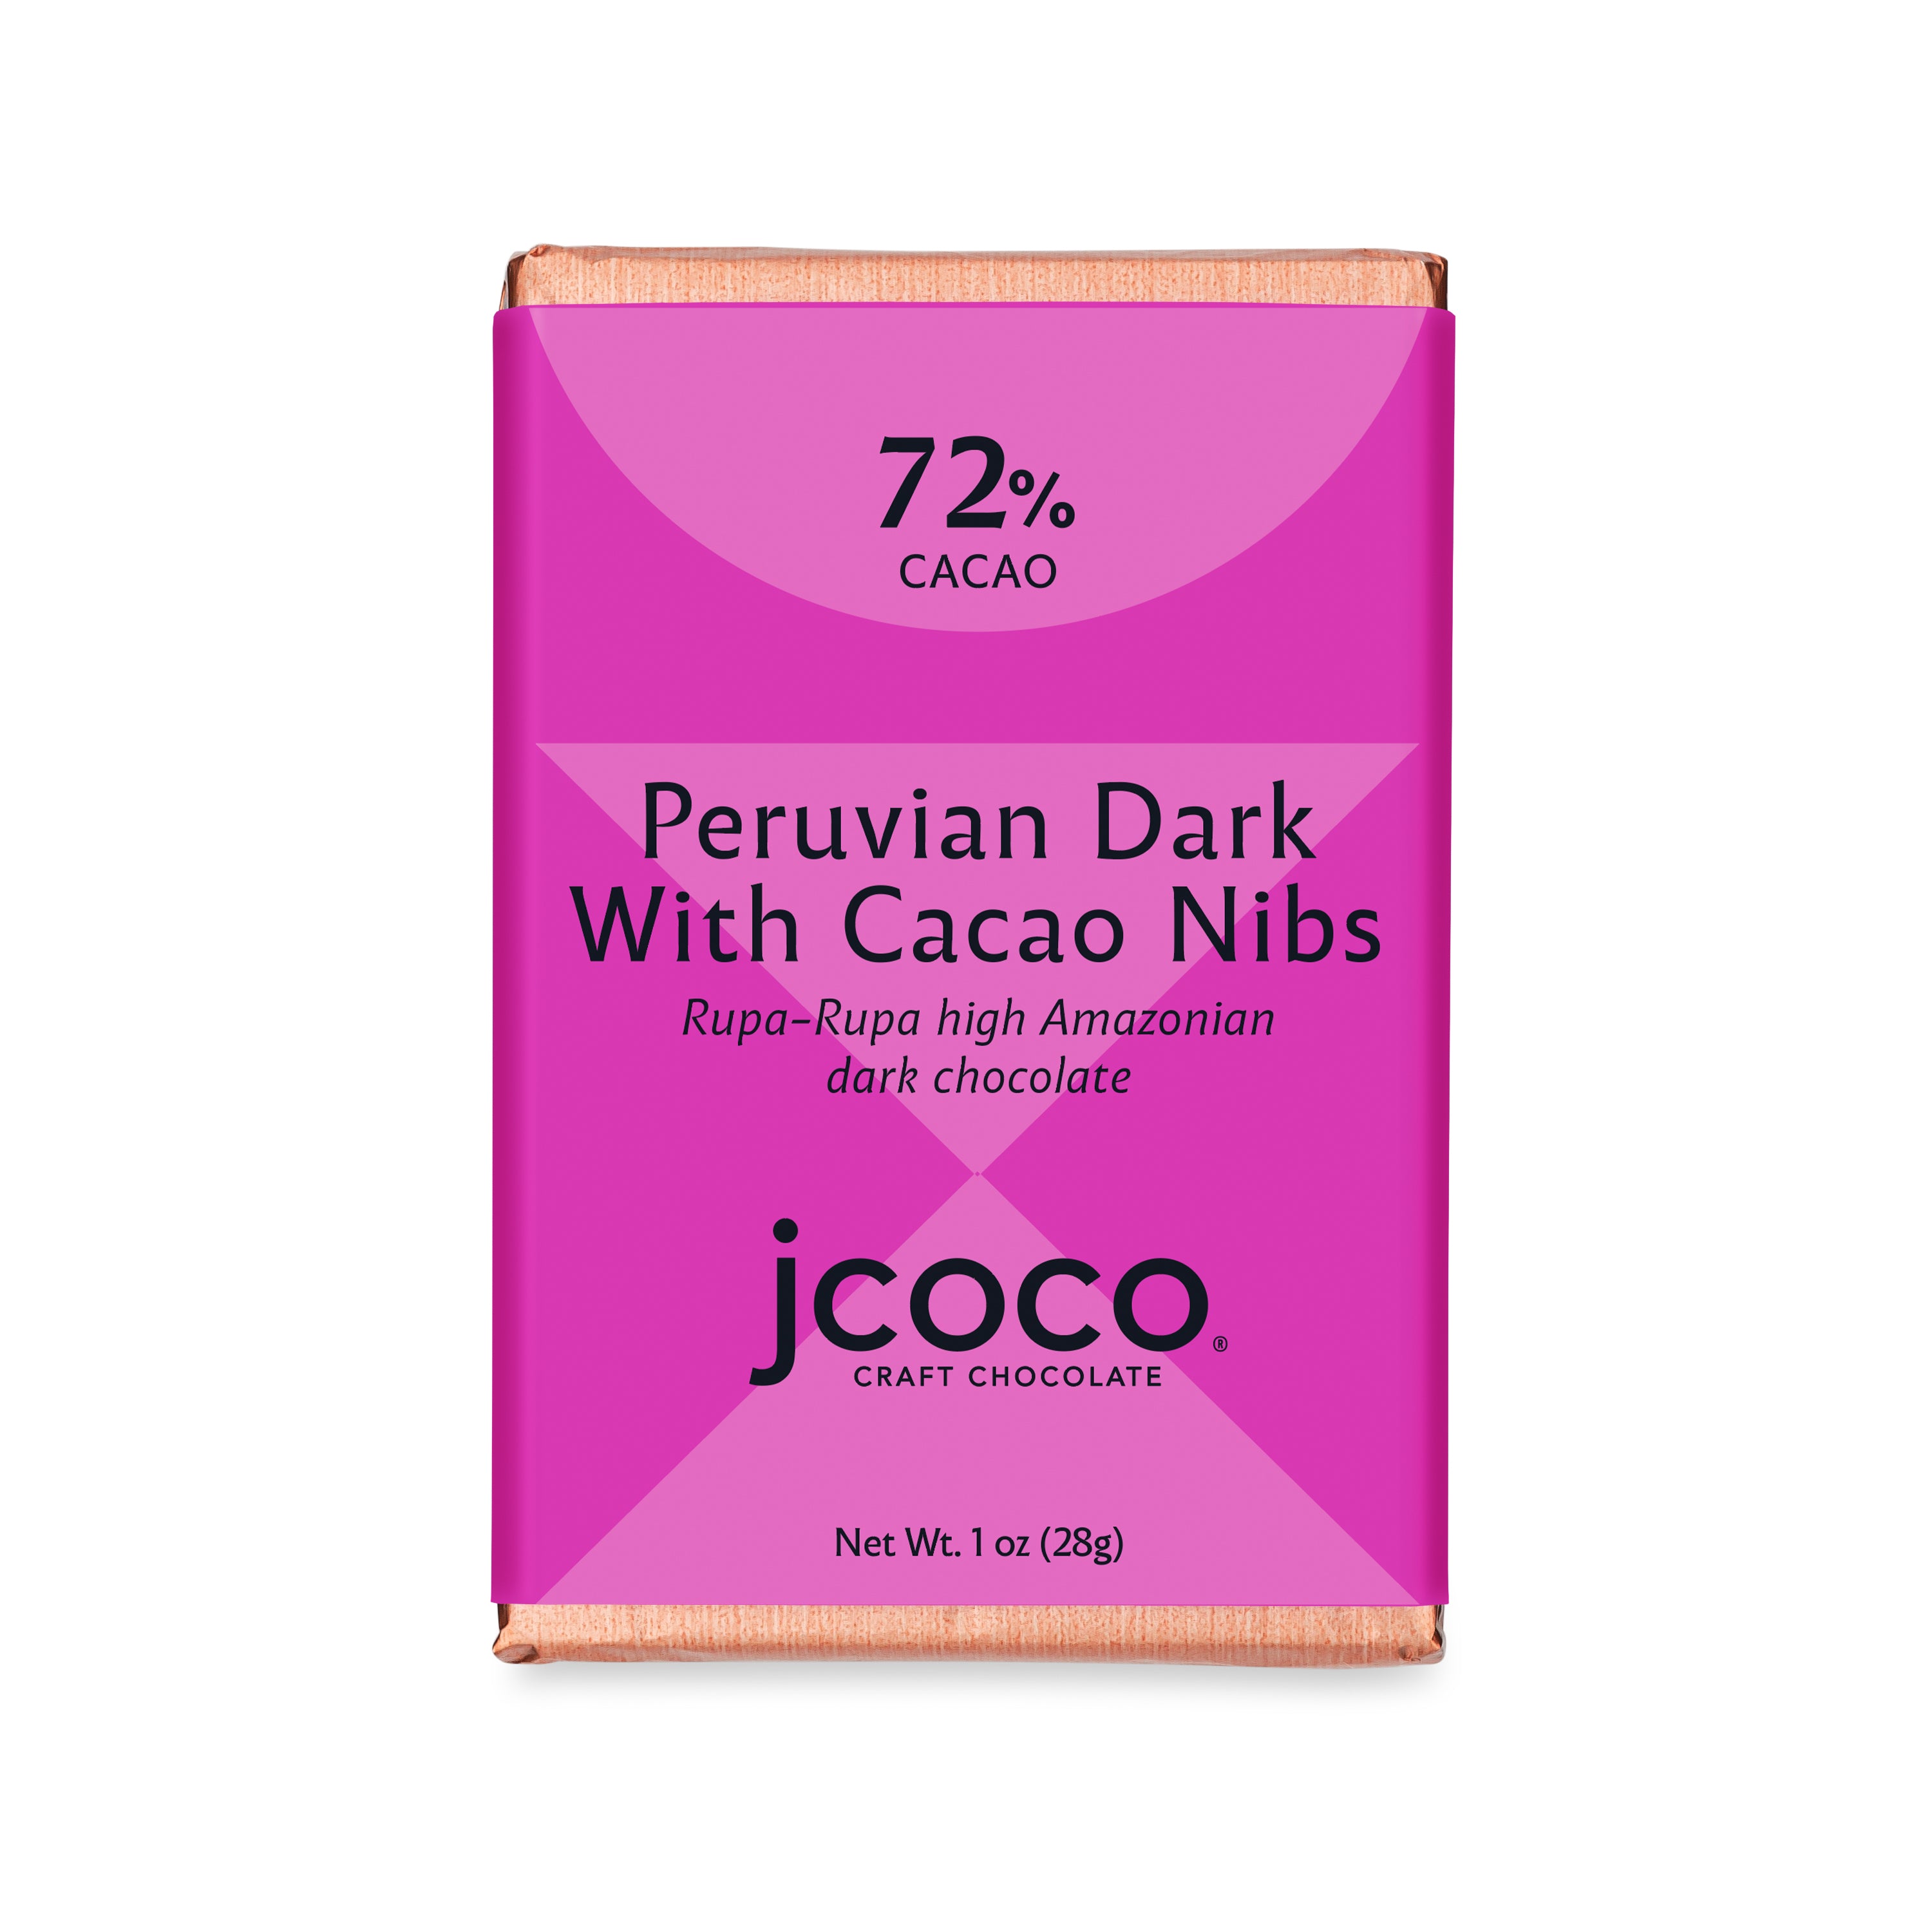 1oz 72% Cacao Peruvia Dark with Nibs chocolate bar